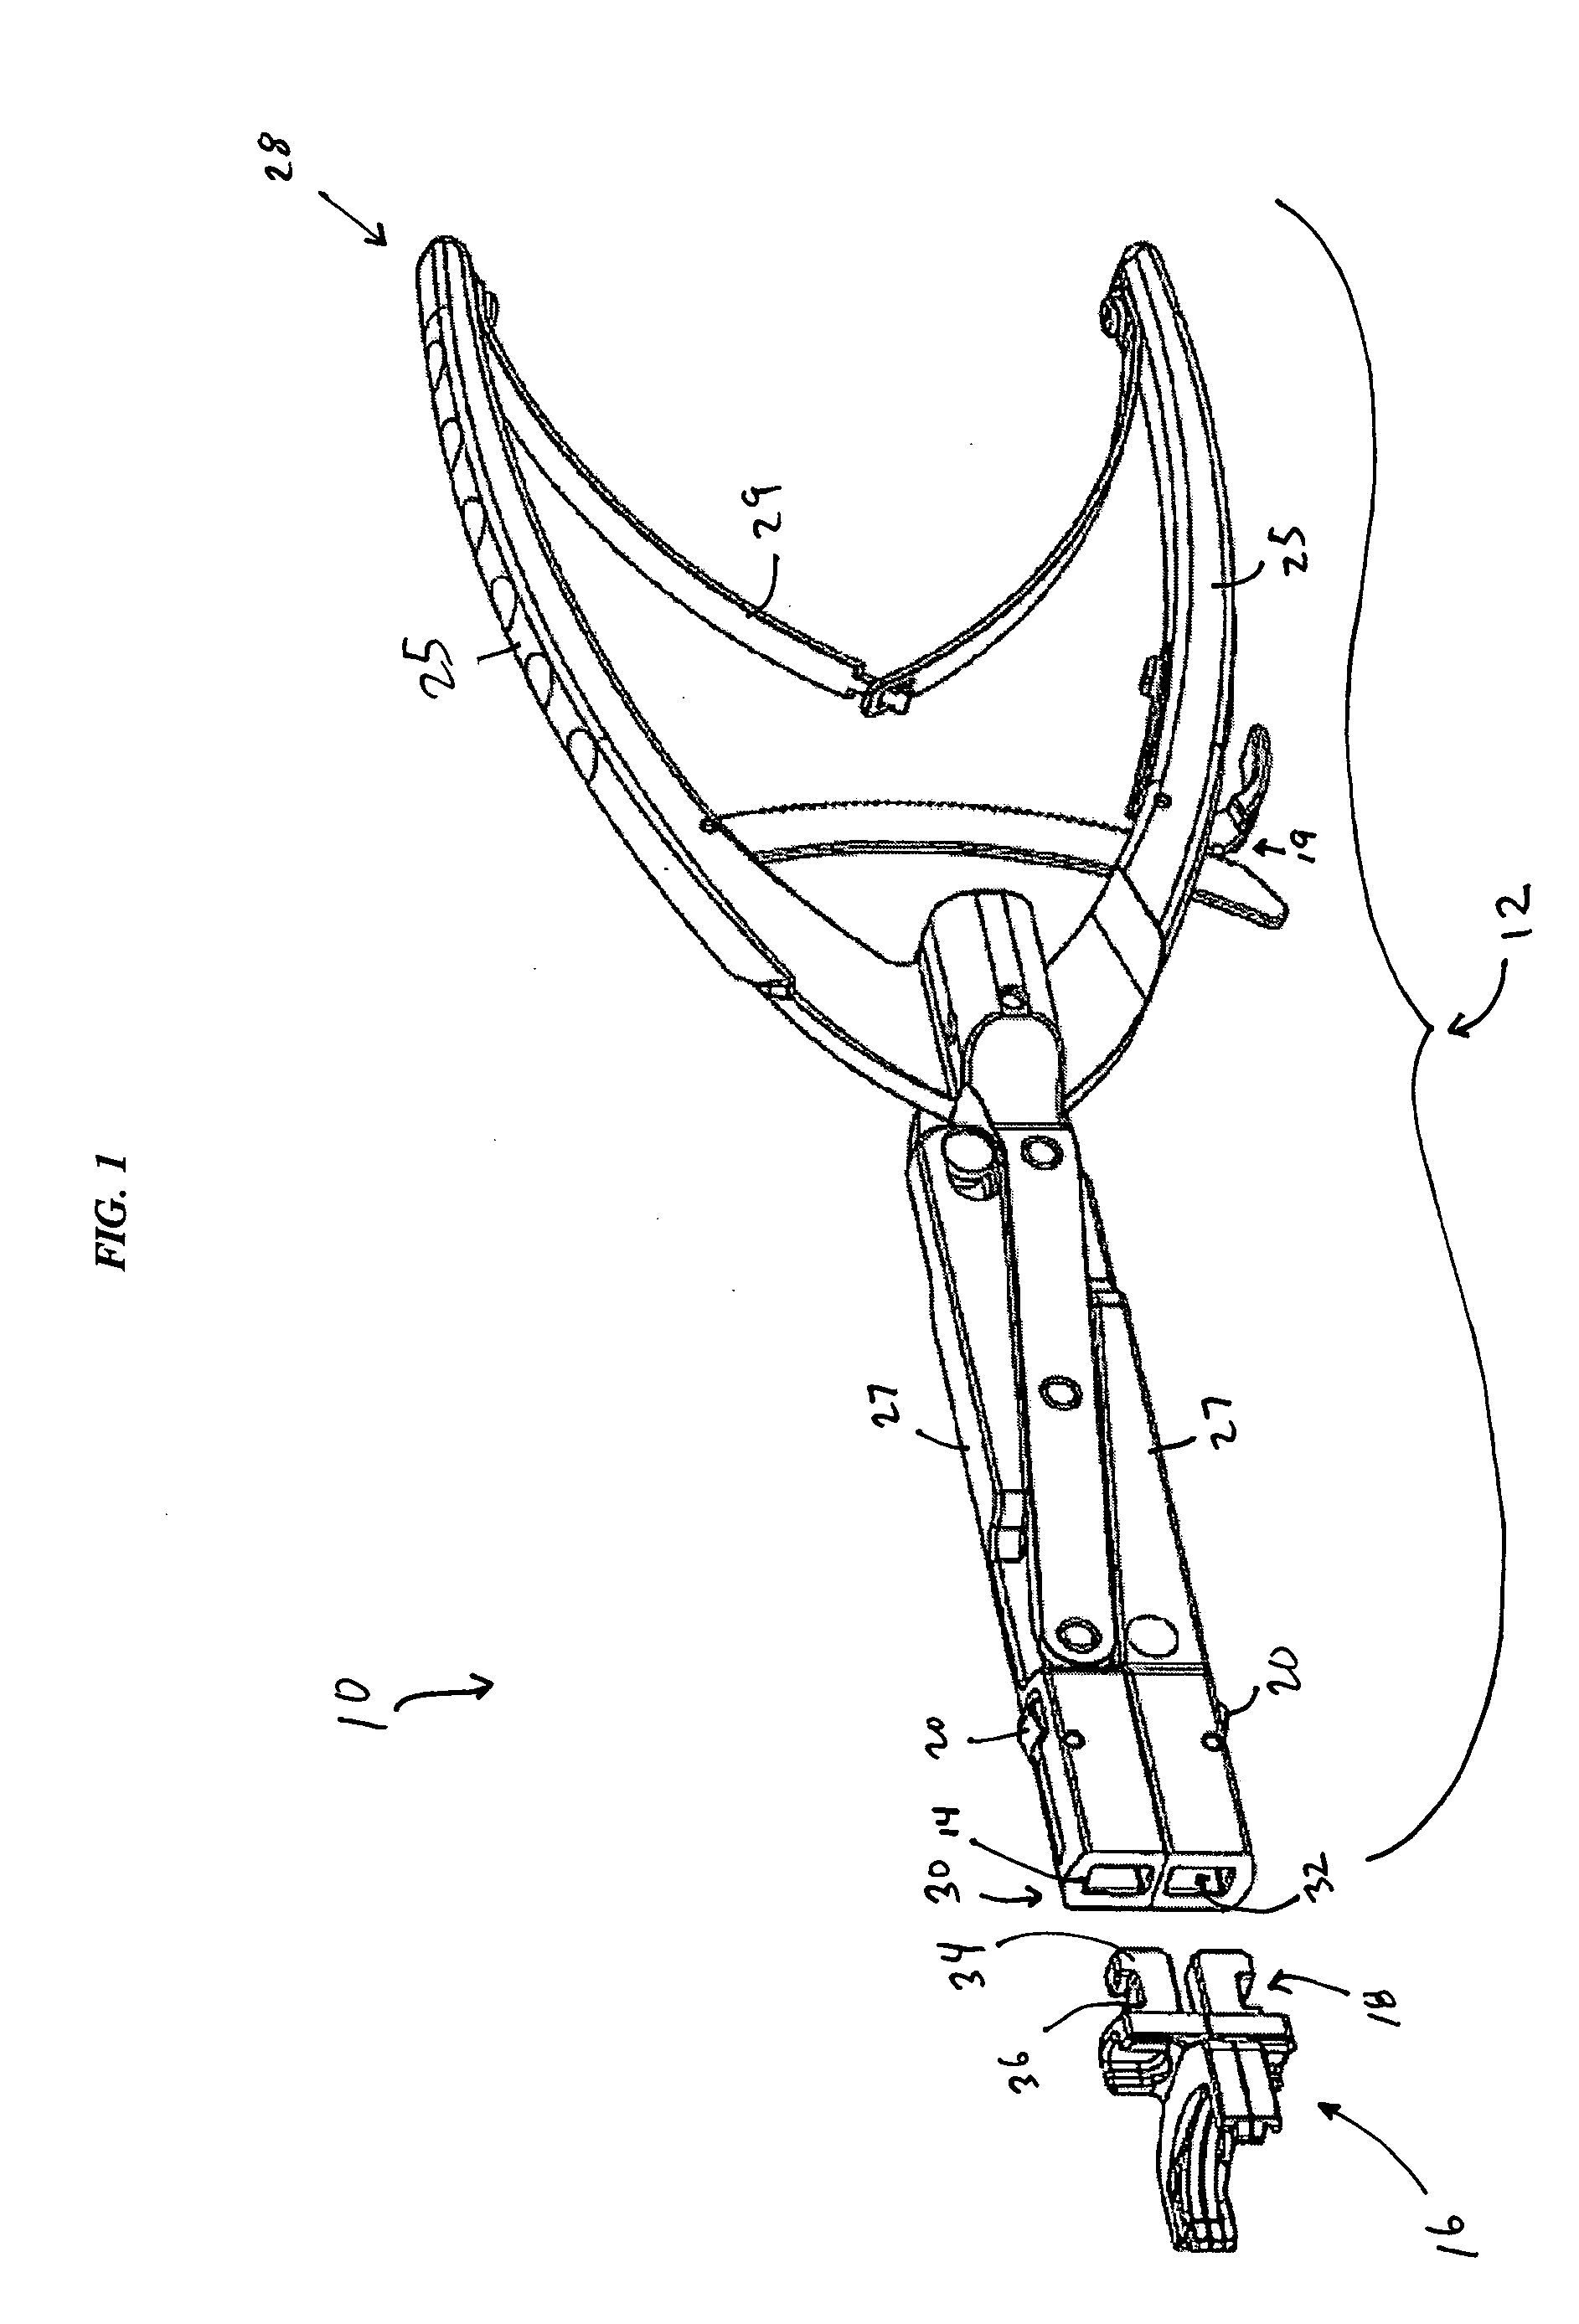 Modular medical tool and connector